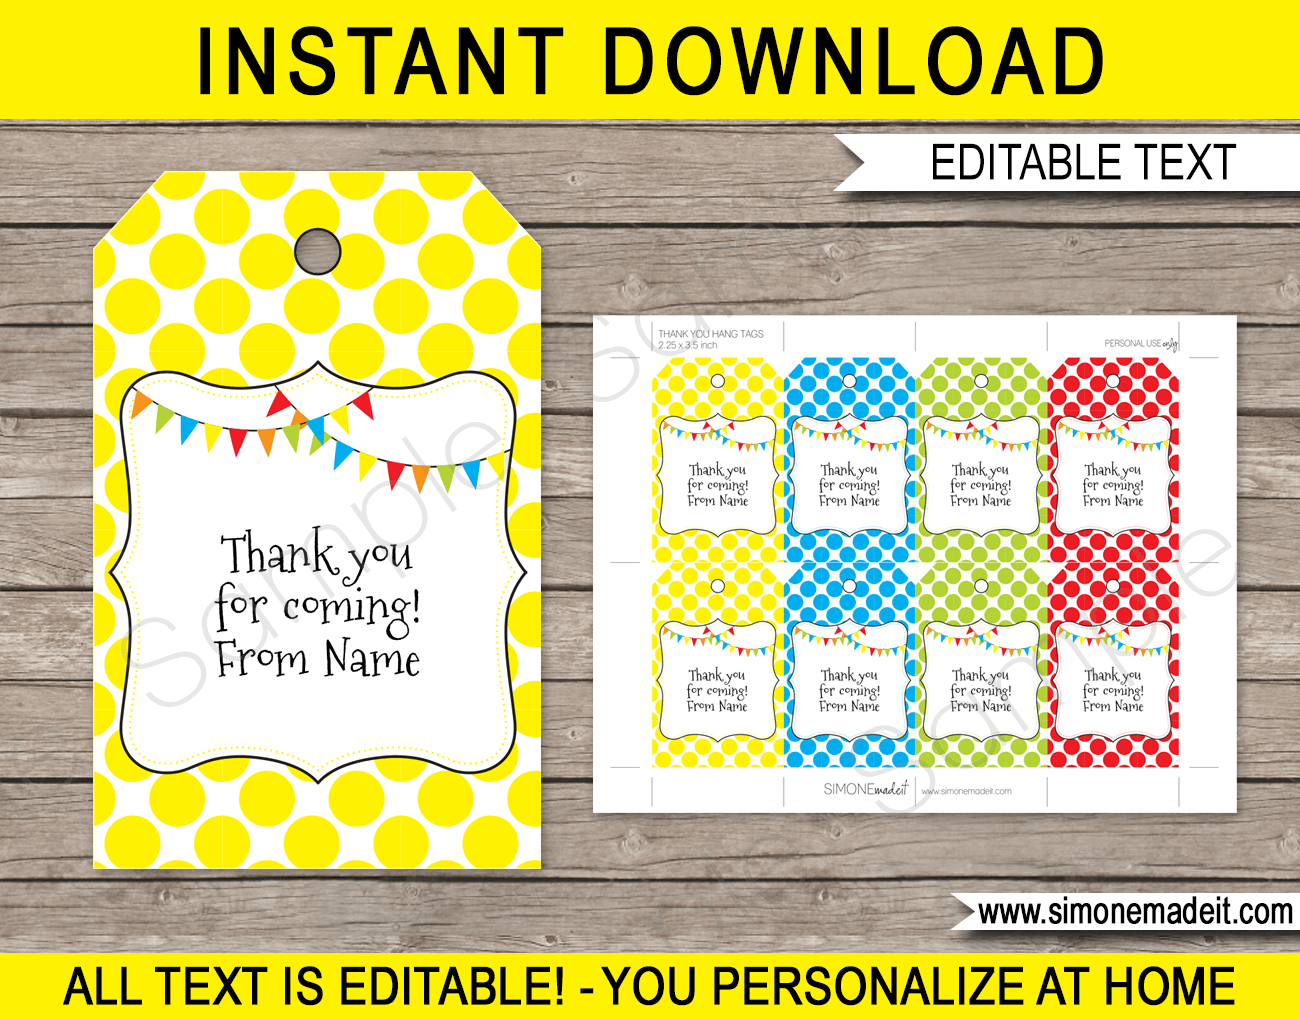 Polkadot Favor Tags Template | Thank You Tags | Gift Tags | Editable DIY Template | $3.00 INSTANT DOWNLOAD via SIMONEmadeit.com